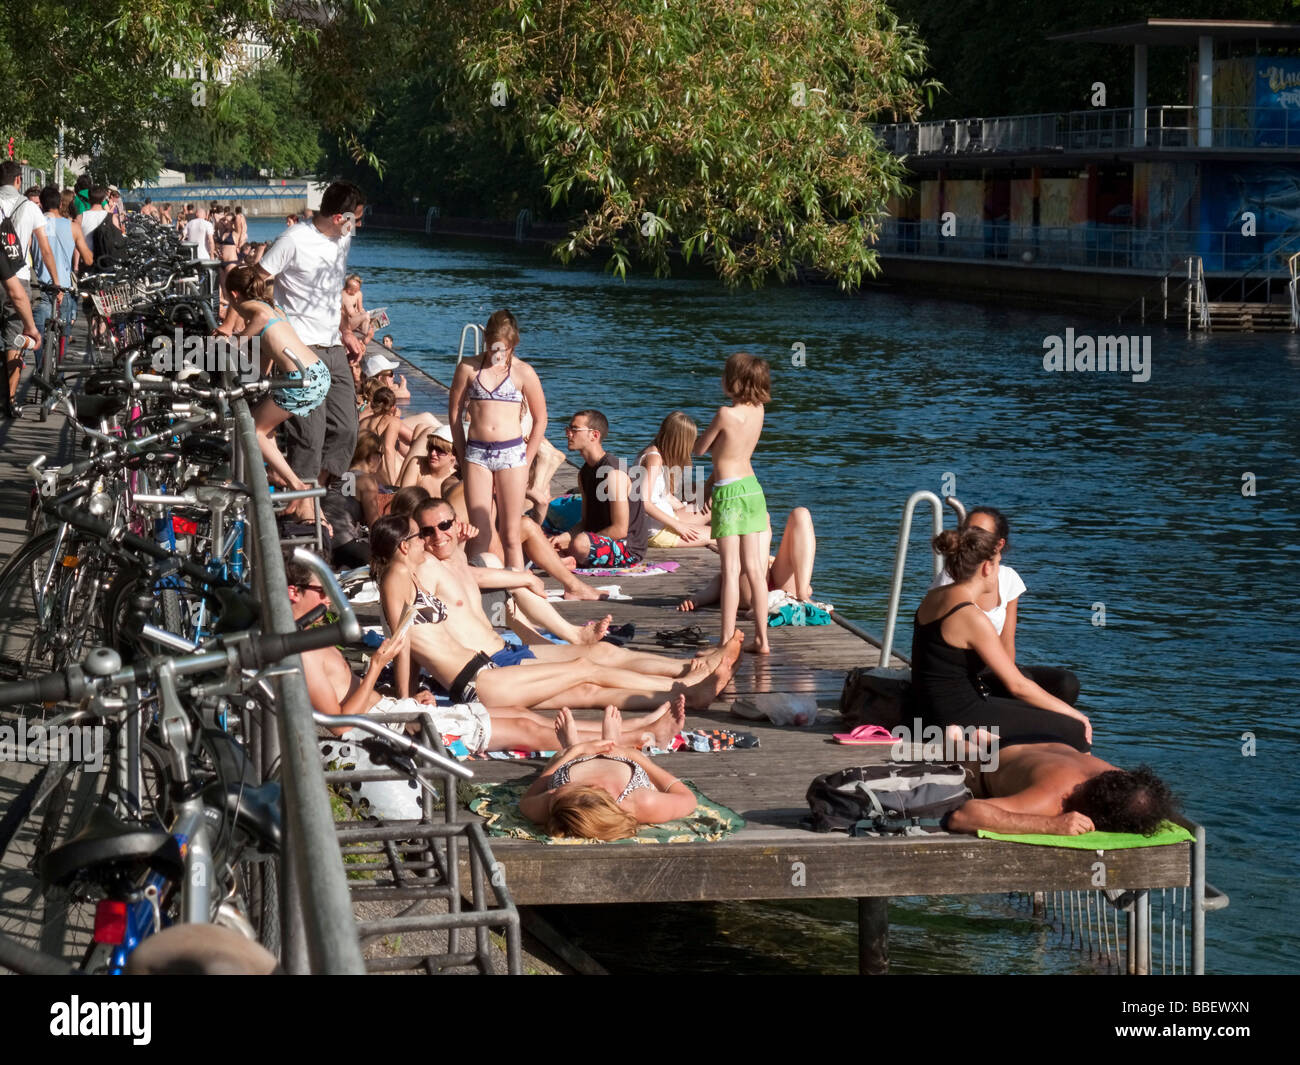 Open air bath Letten at river Limmat people sunbathing Zurich Switzerland Stock Photo